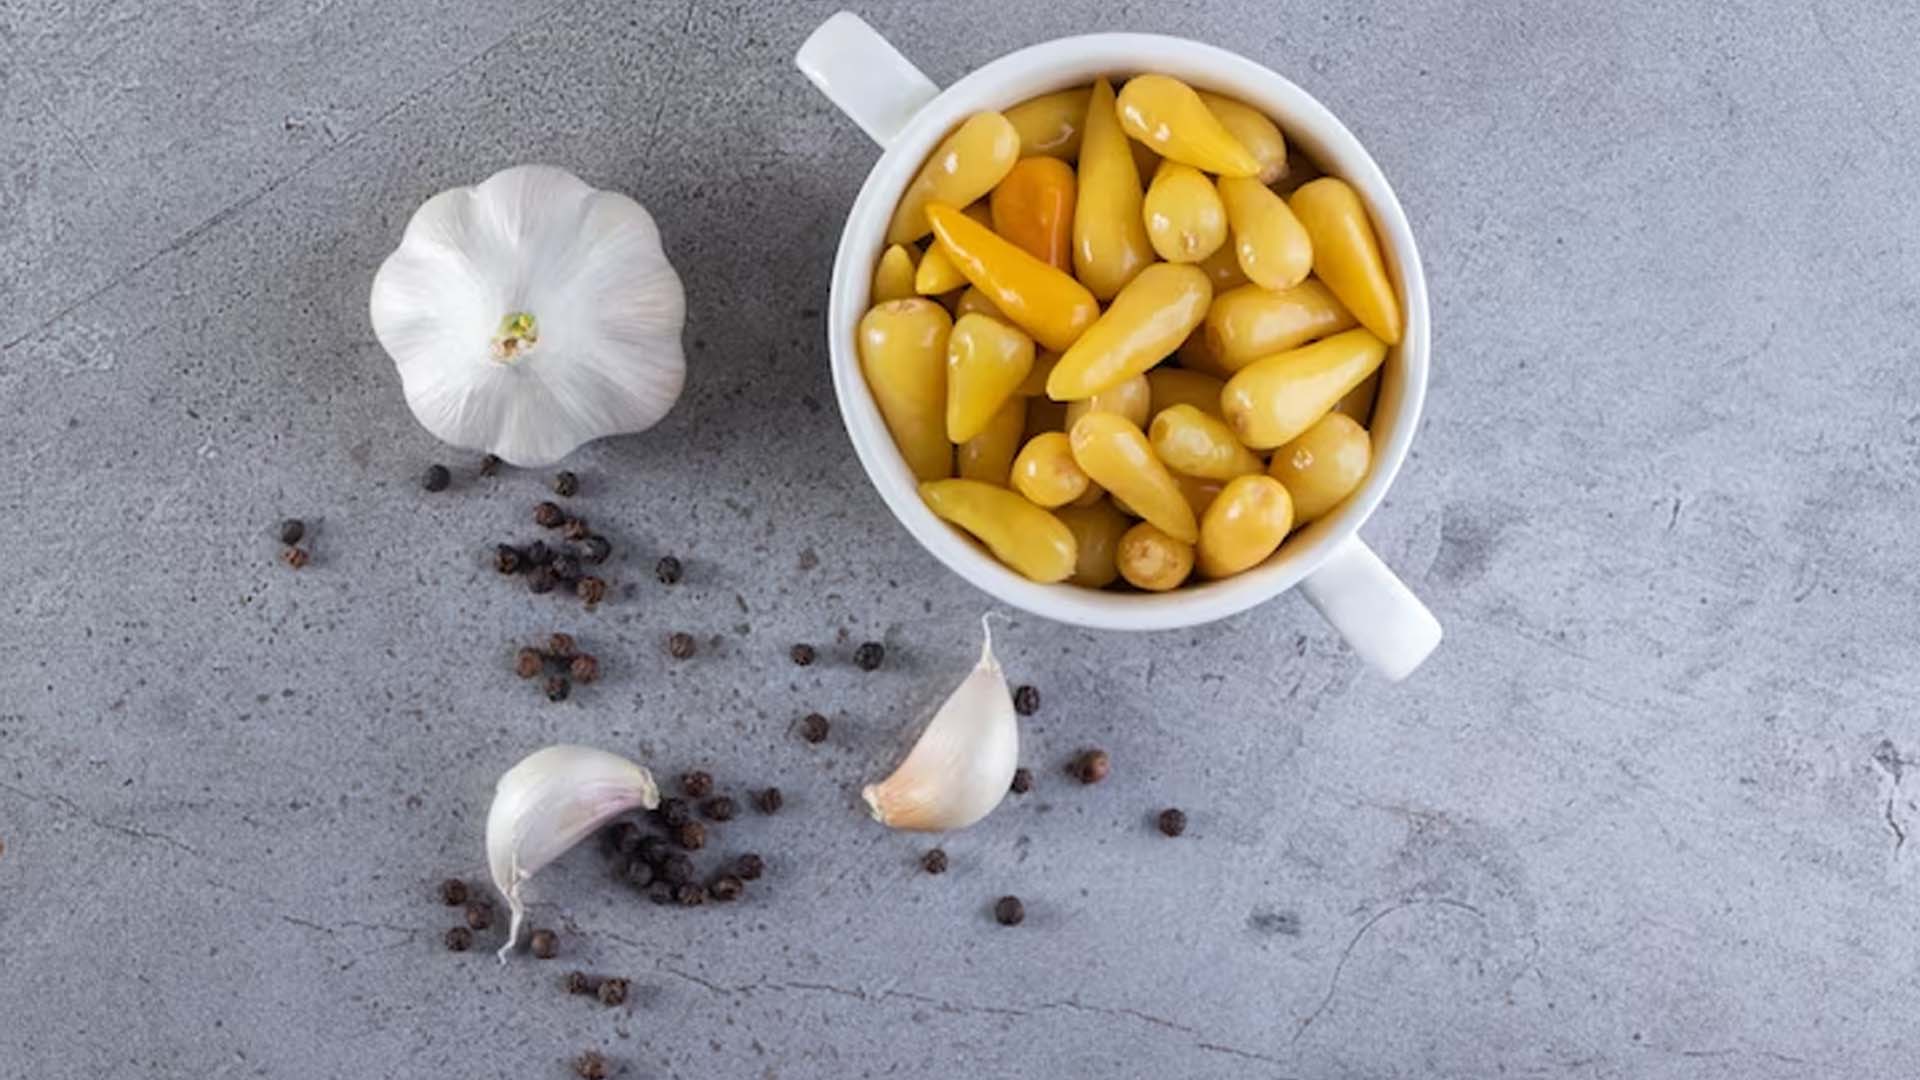 Does Roasting Garlic Remove Health Benefits?